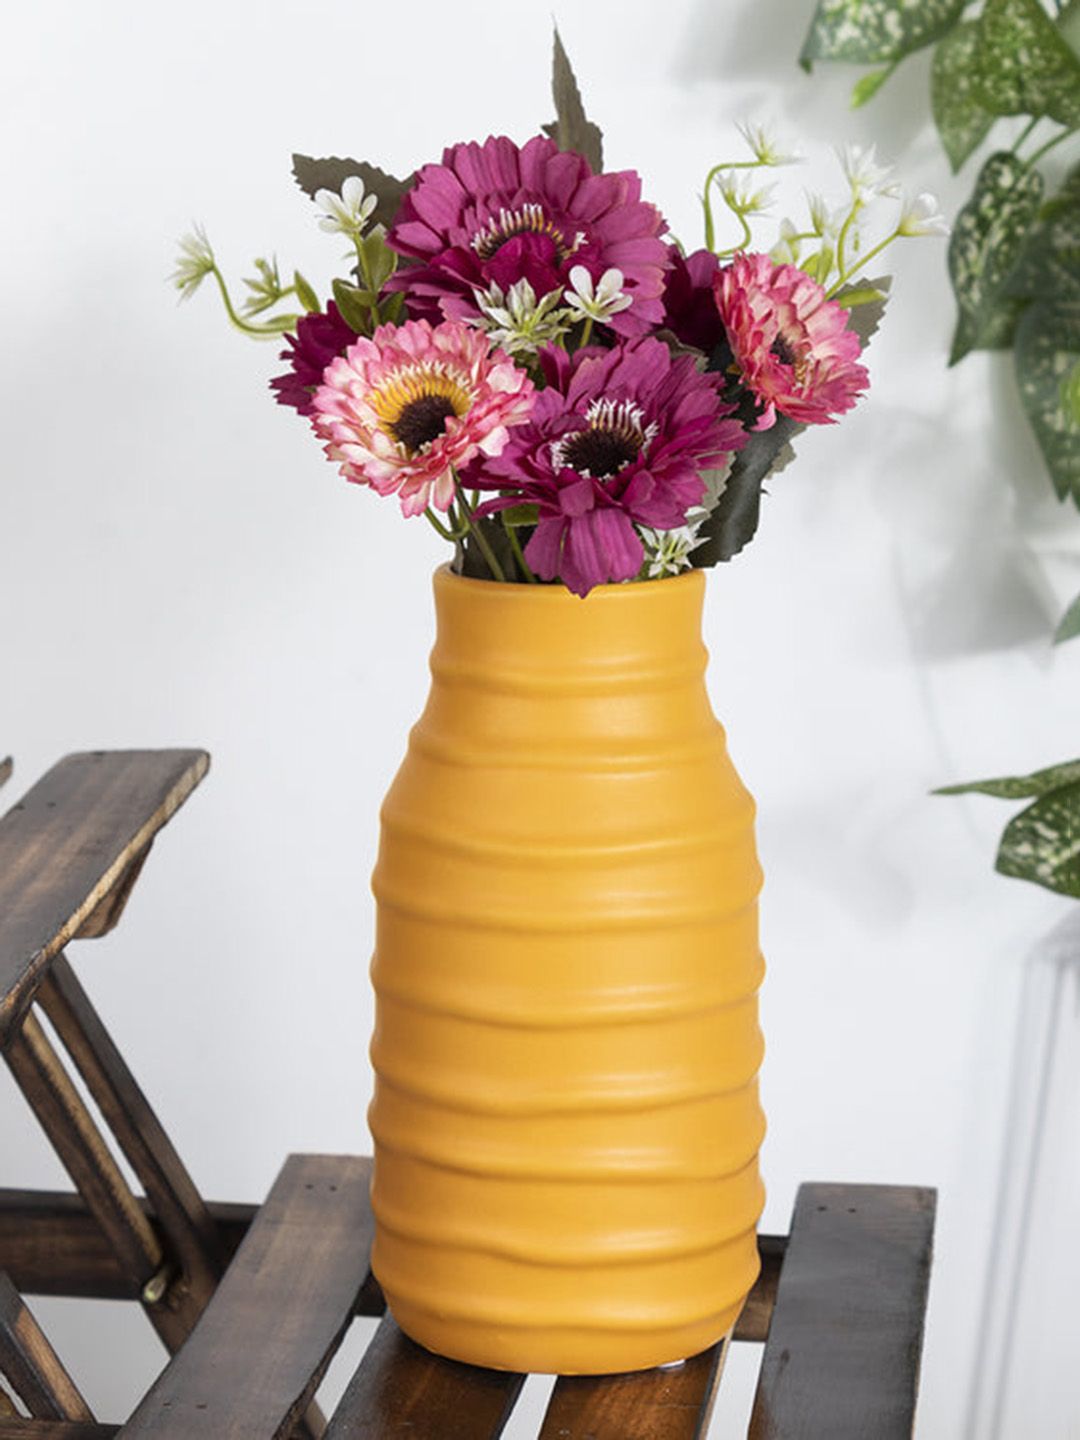 MARKET99 Yellow Textured Ceramic Flower Vase Price in India